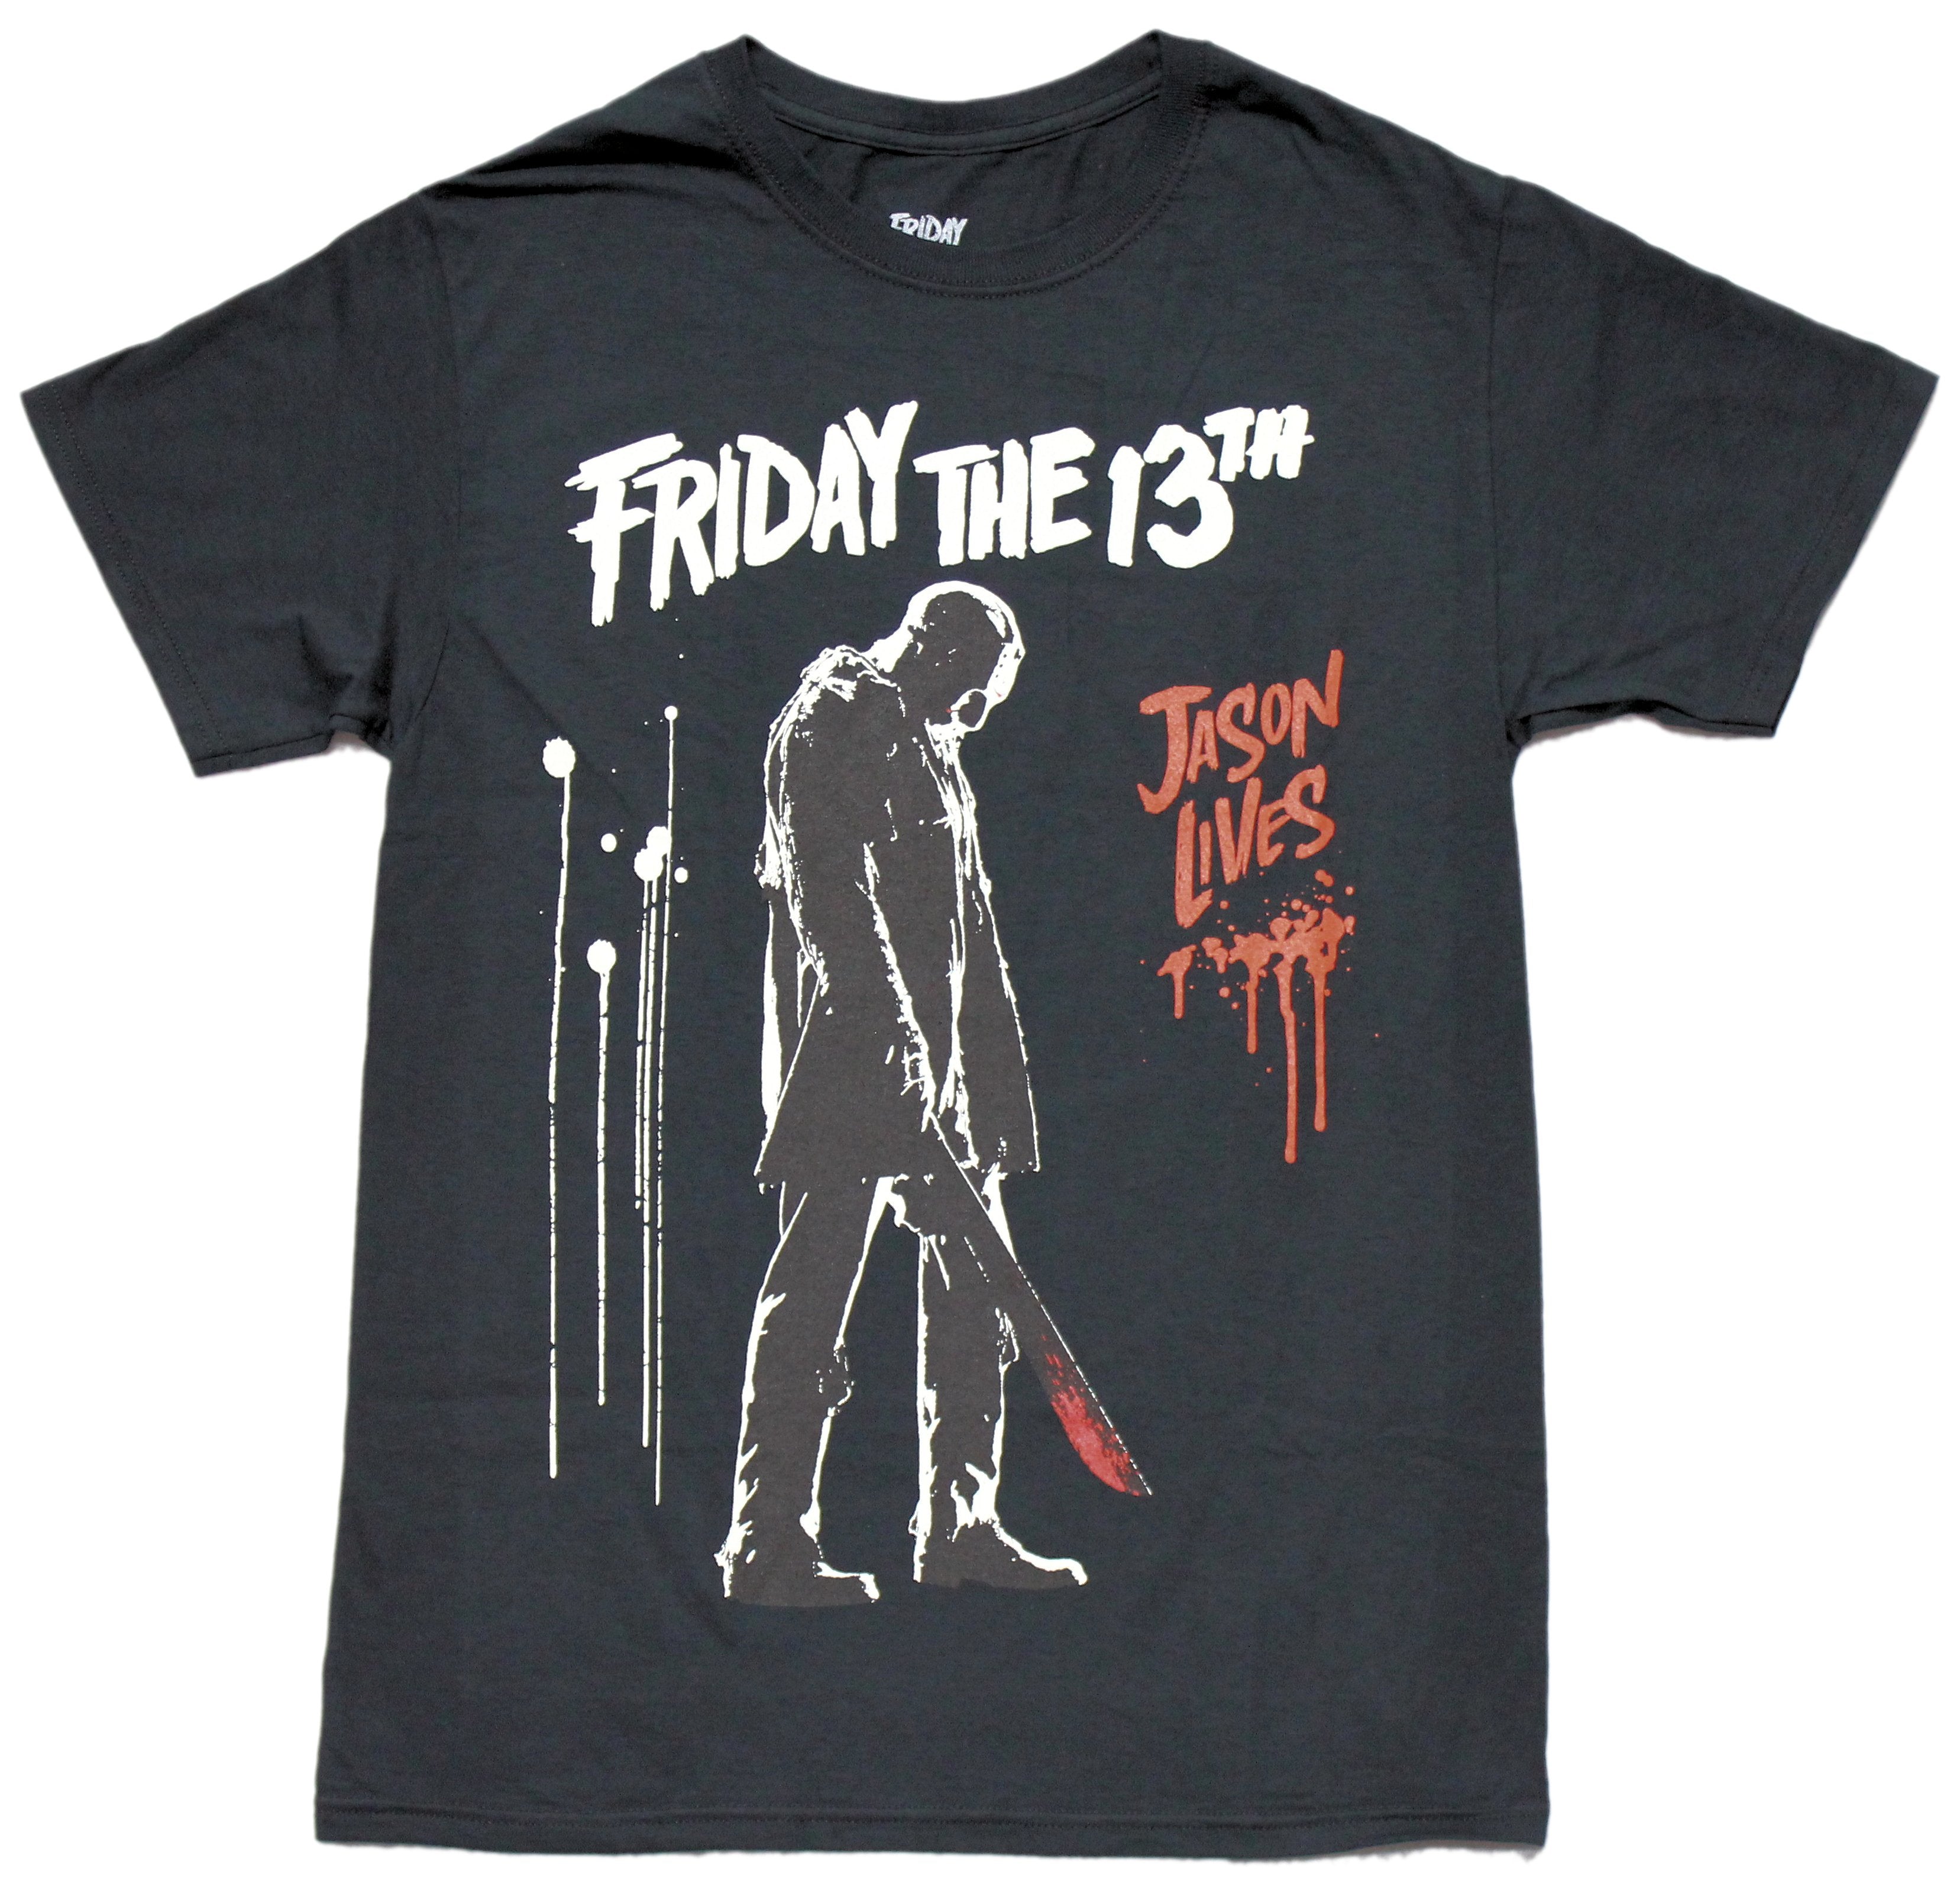 Friday the 13th Part IV: Jason Lives Mens T-Shirt - Bloody Machete